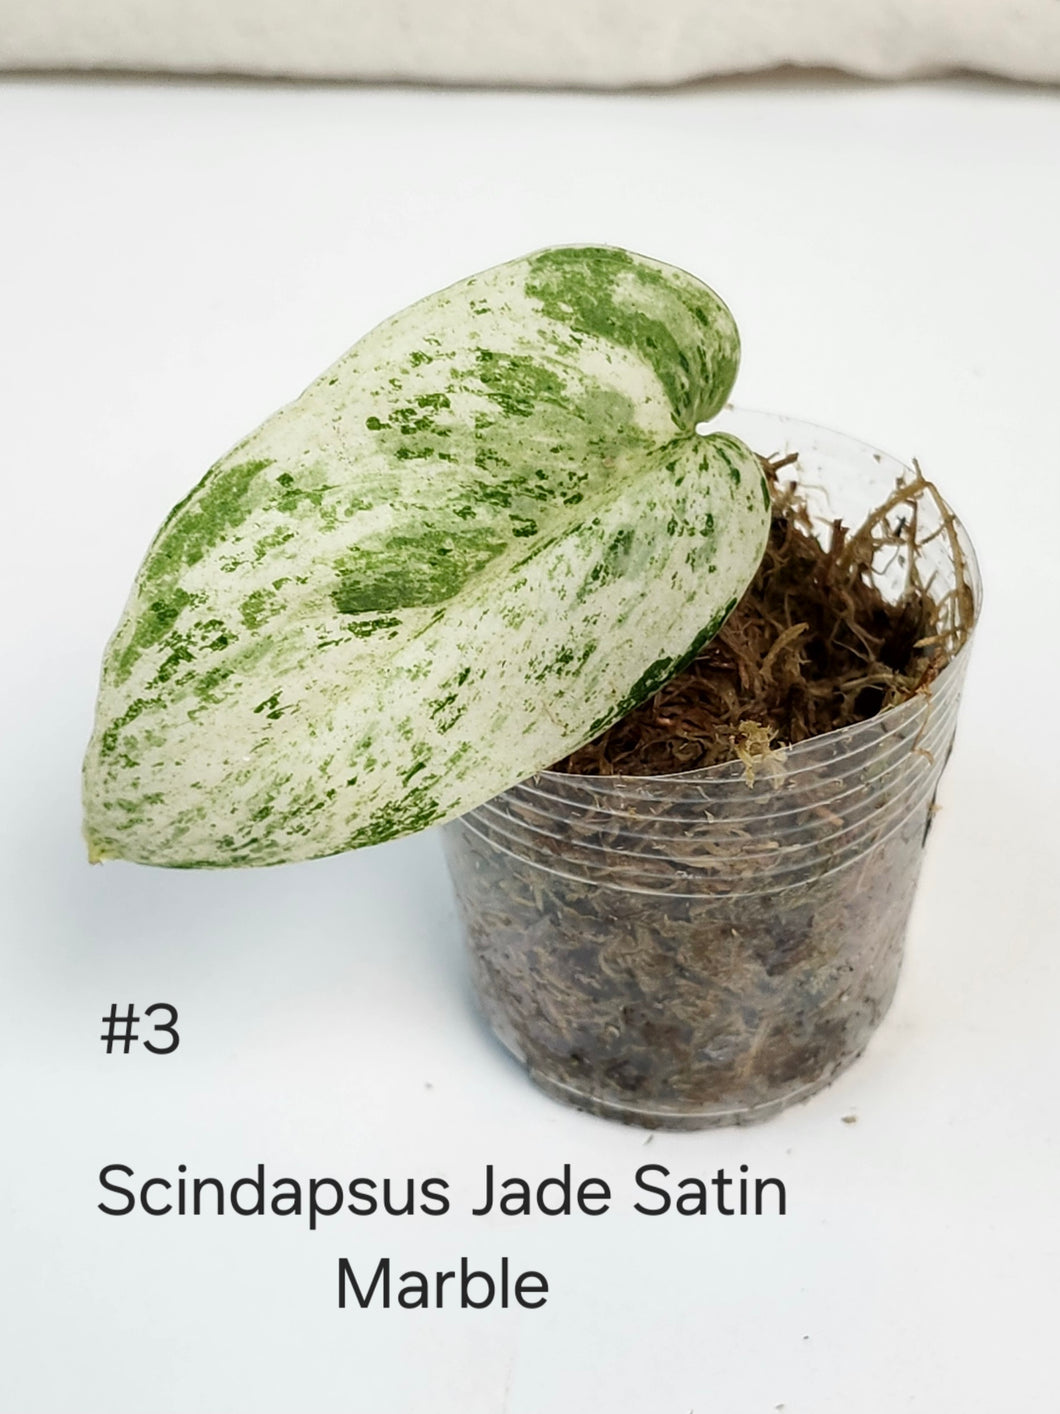 Scindapsus jade satin marble #3